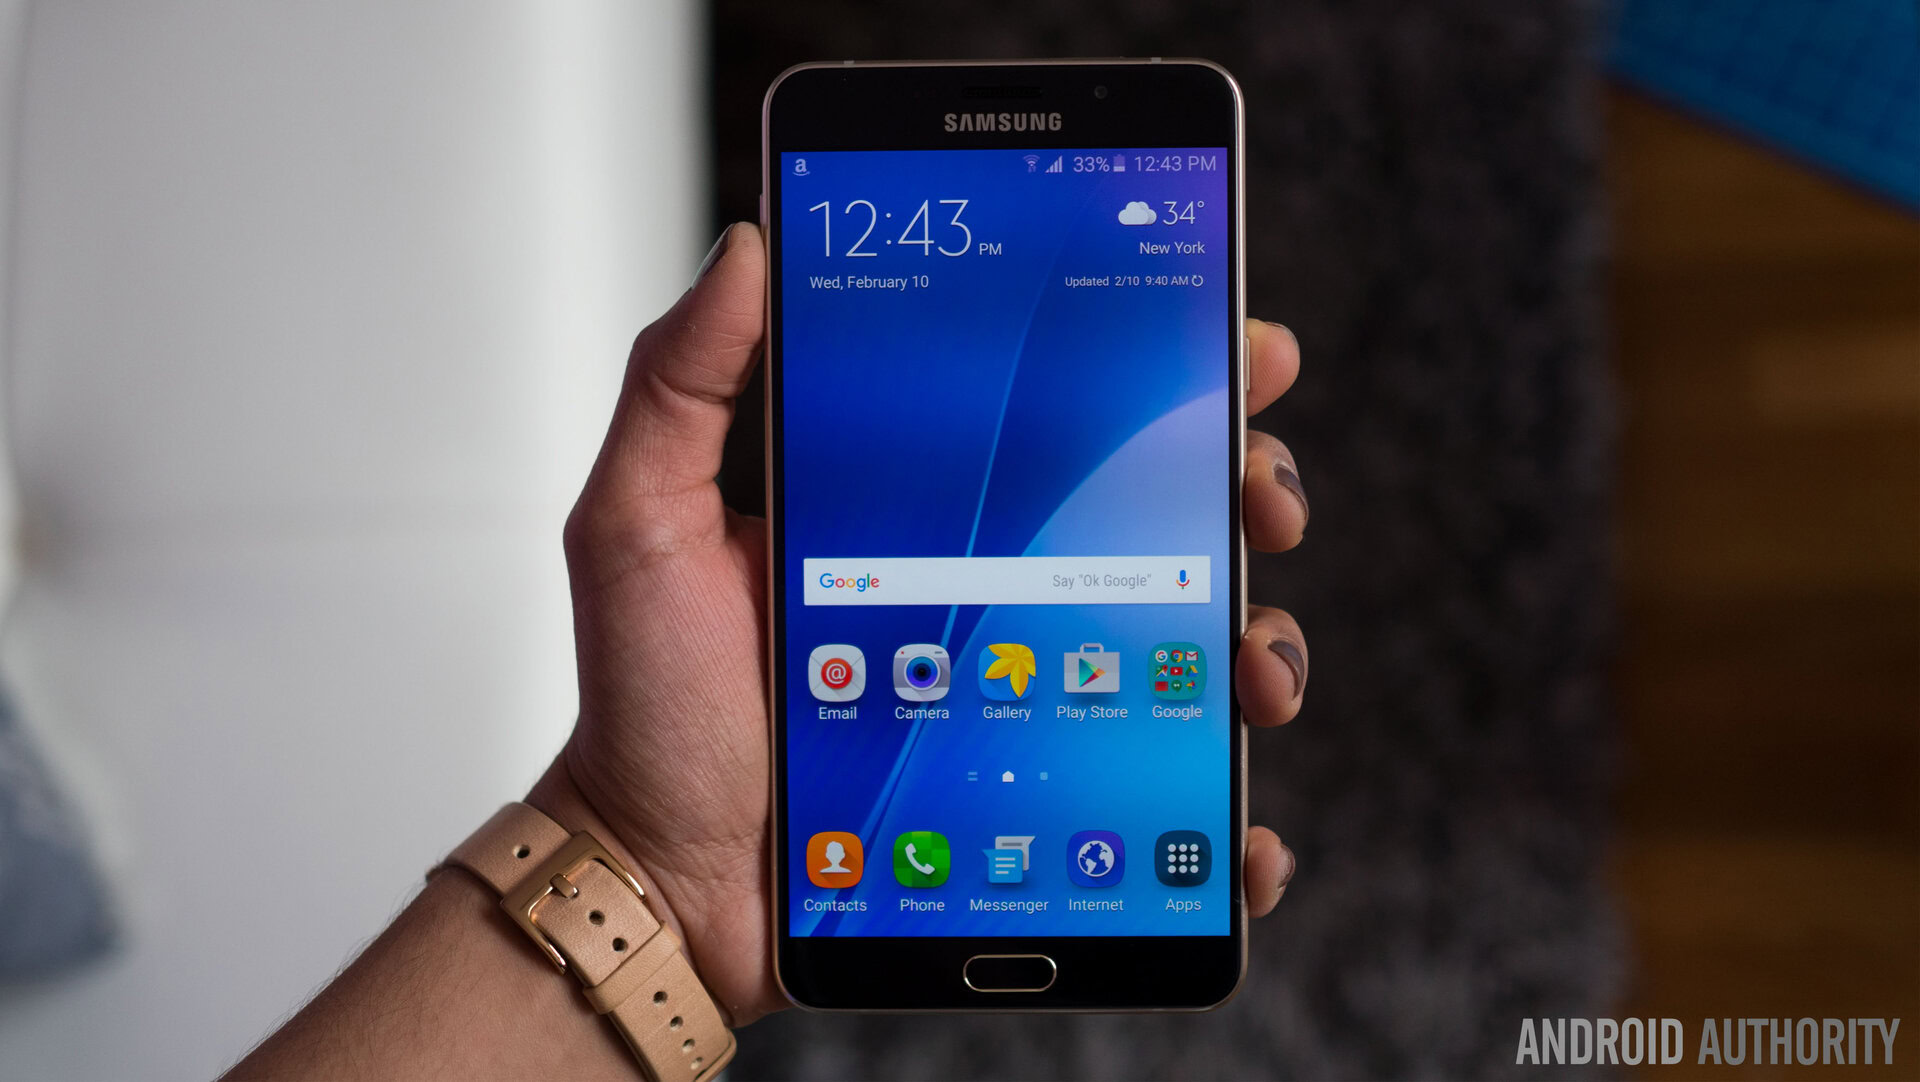 Samsung Galaxy M Pro